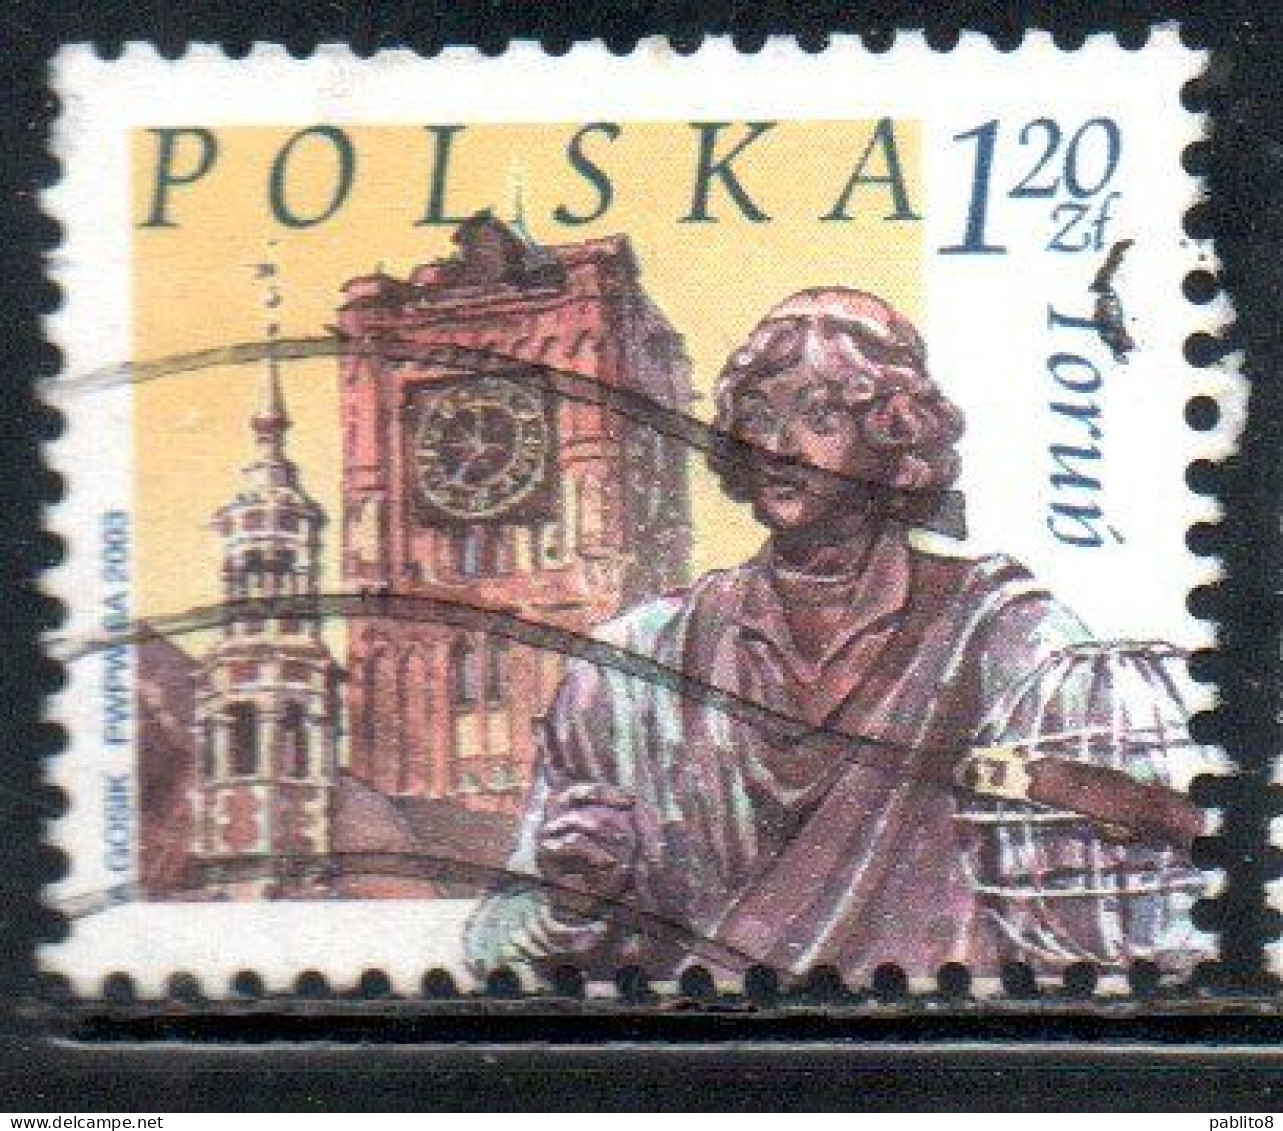 POLONIA POLAND POLSKA 2003 TOWER OF OLD CITY HALL STATUE OF NICOLAUS COPERNICUS TORUN 1.20z USED USATO OBLITERE' - Gebruikt